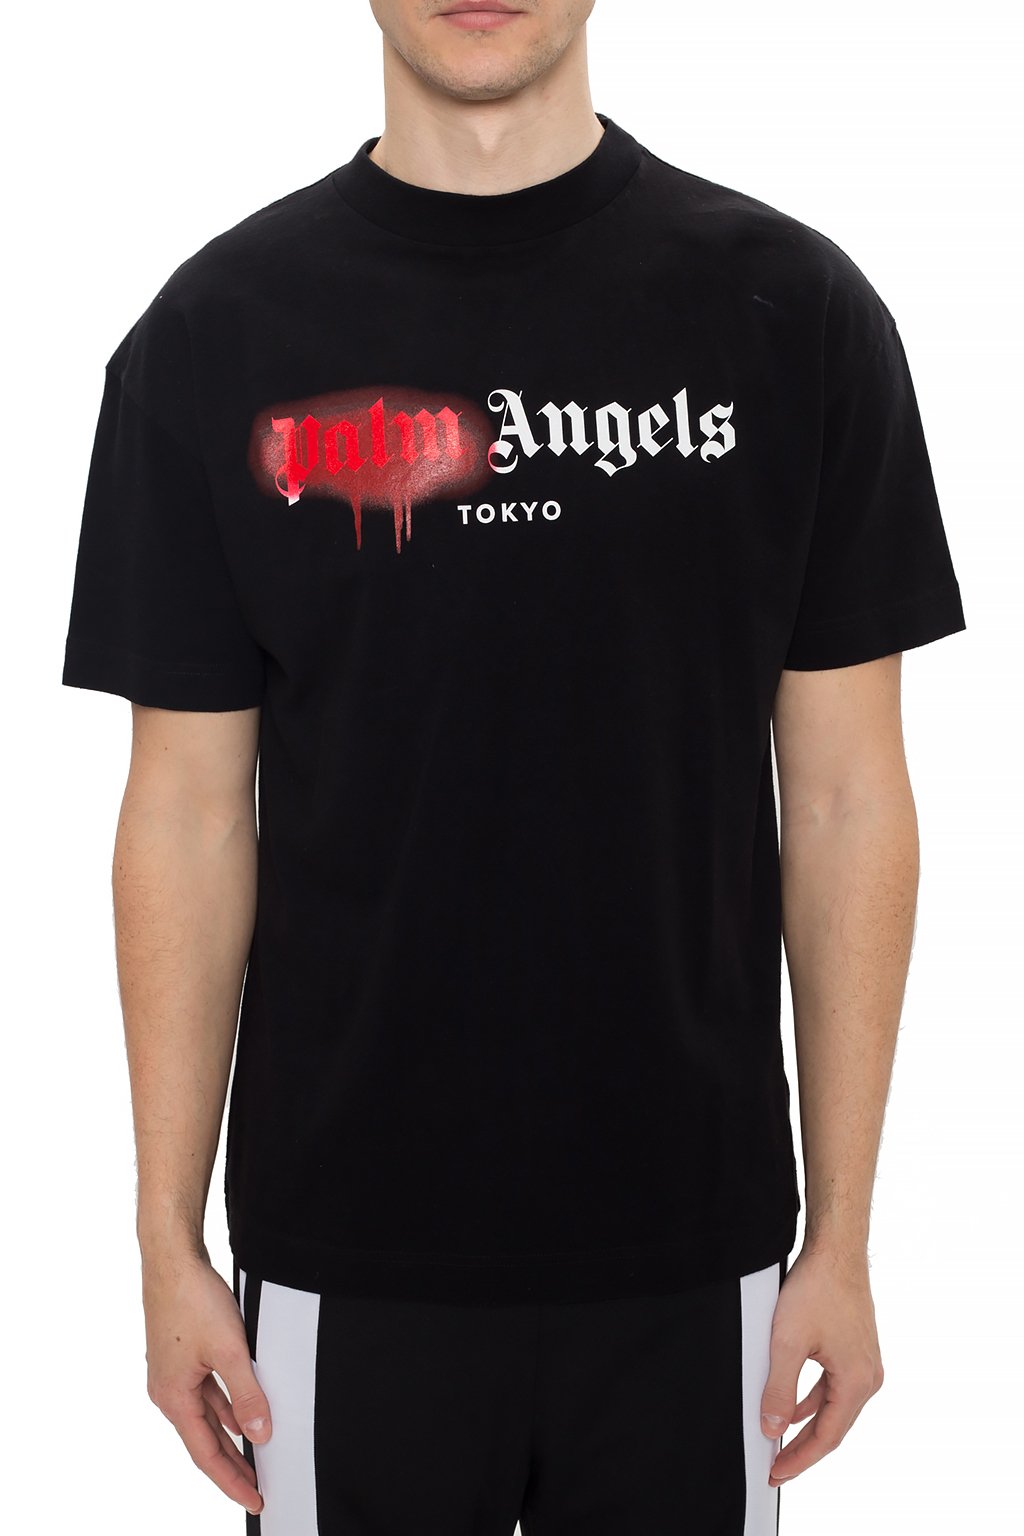 palm angels tokyo t shirt